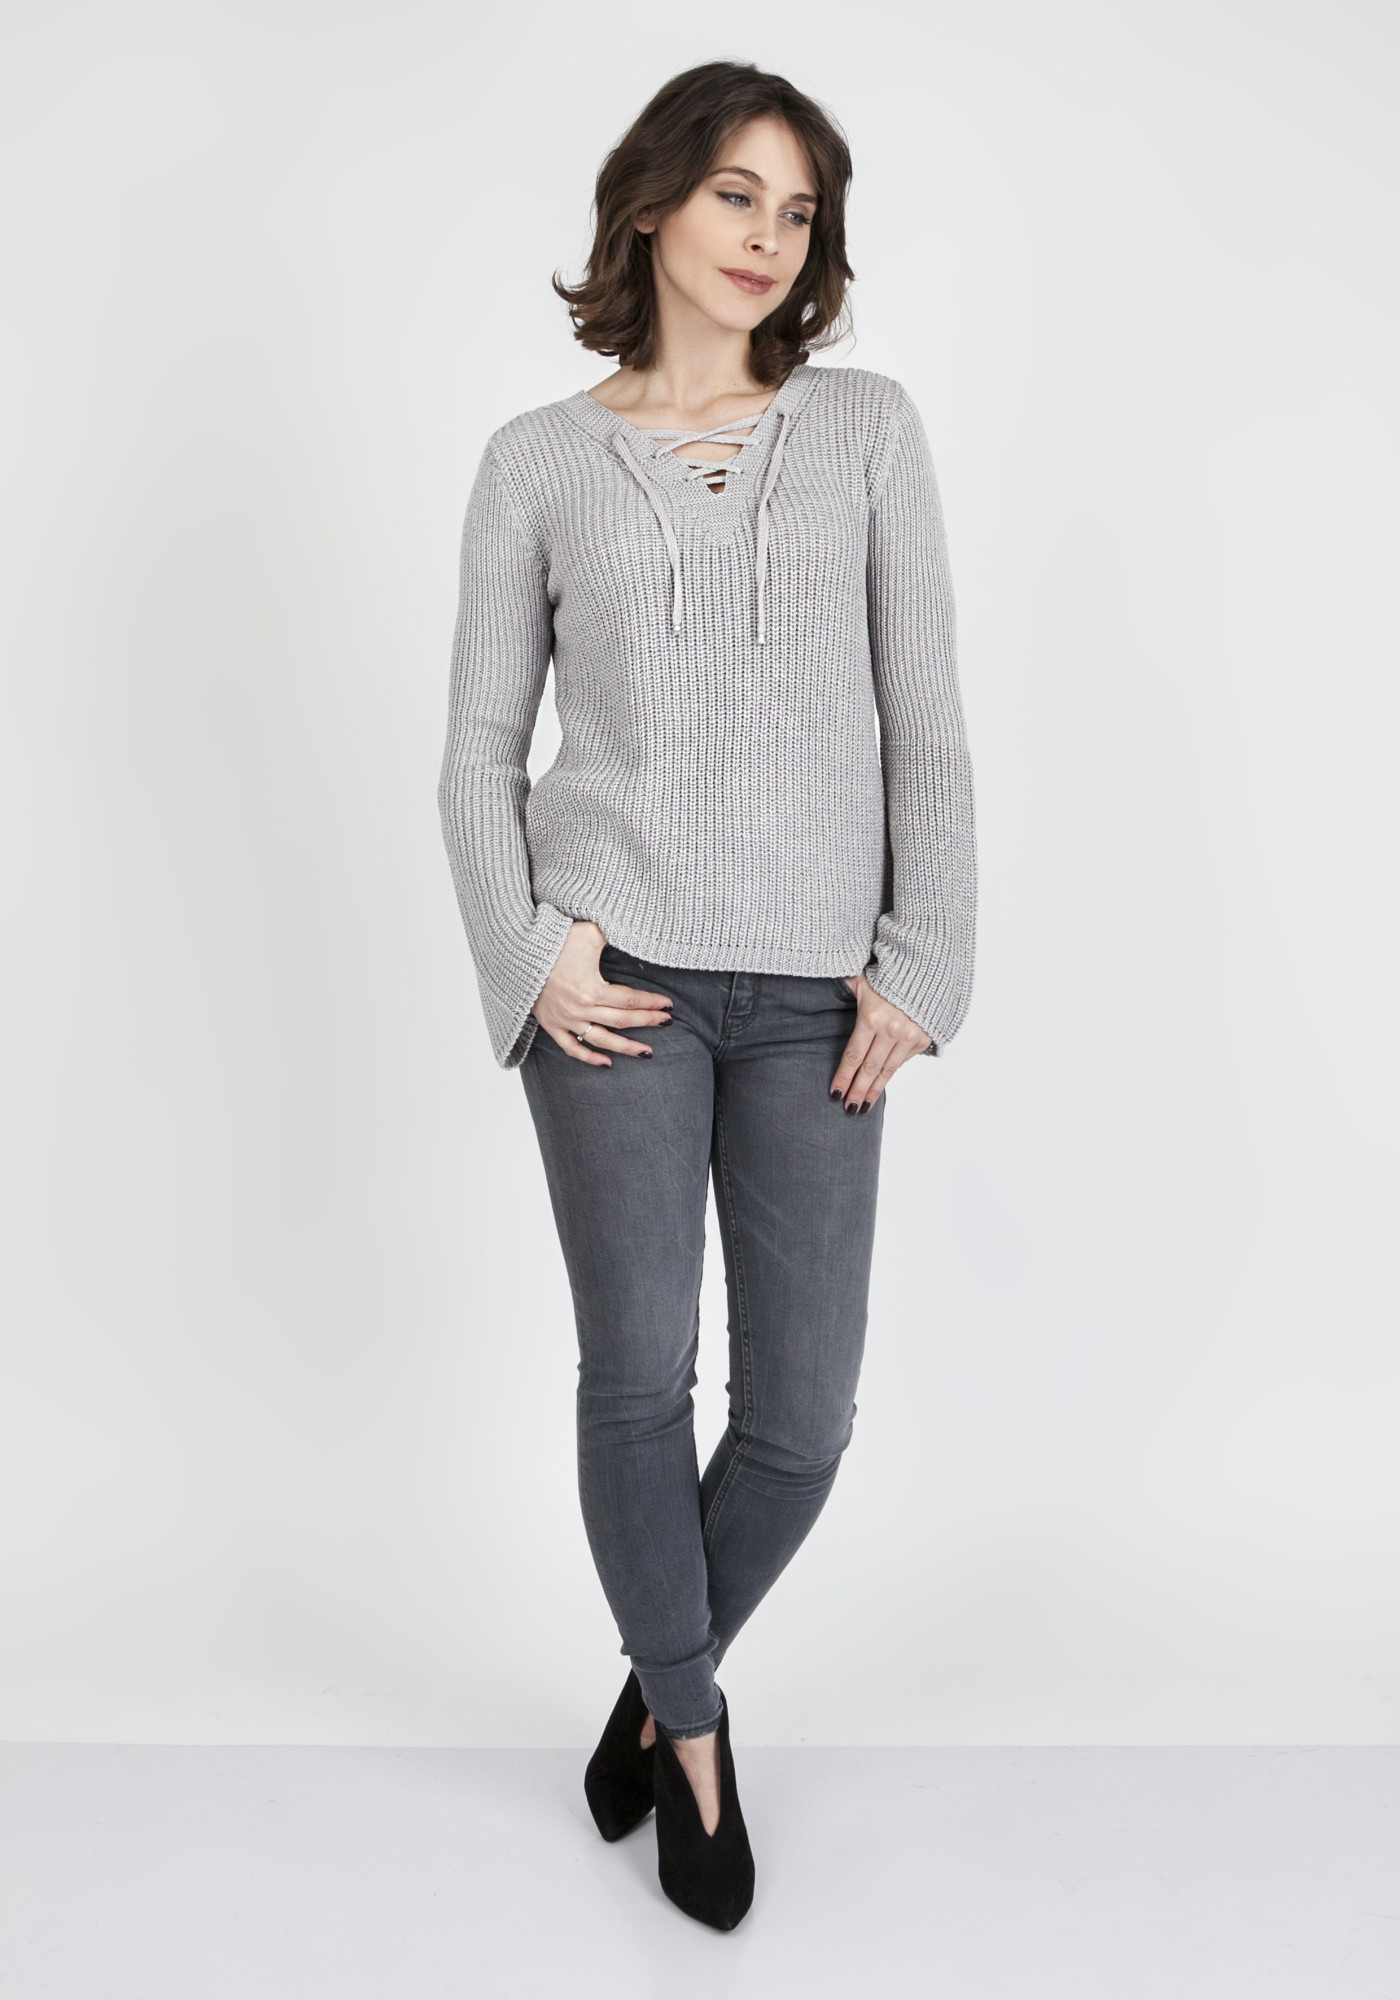 Dámský svetr Kylie SWE 117 Sweater Grey - MKMSwetters S